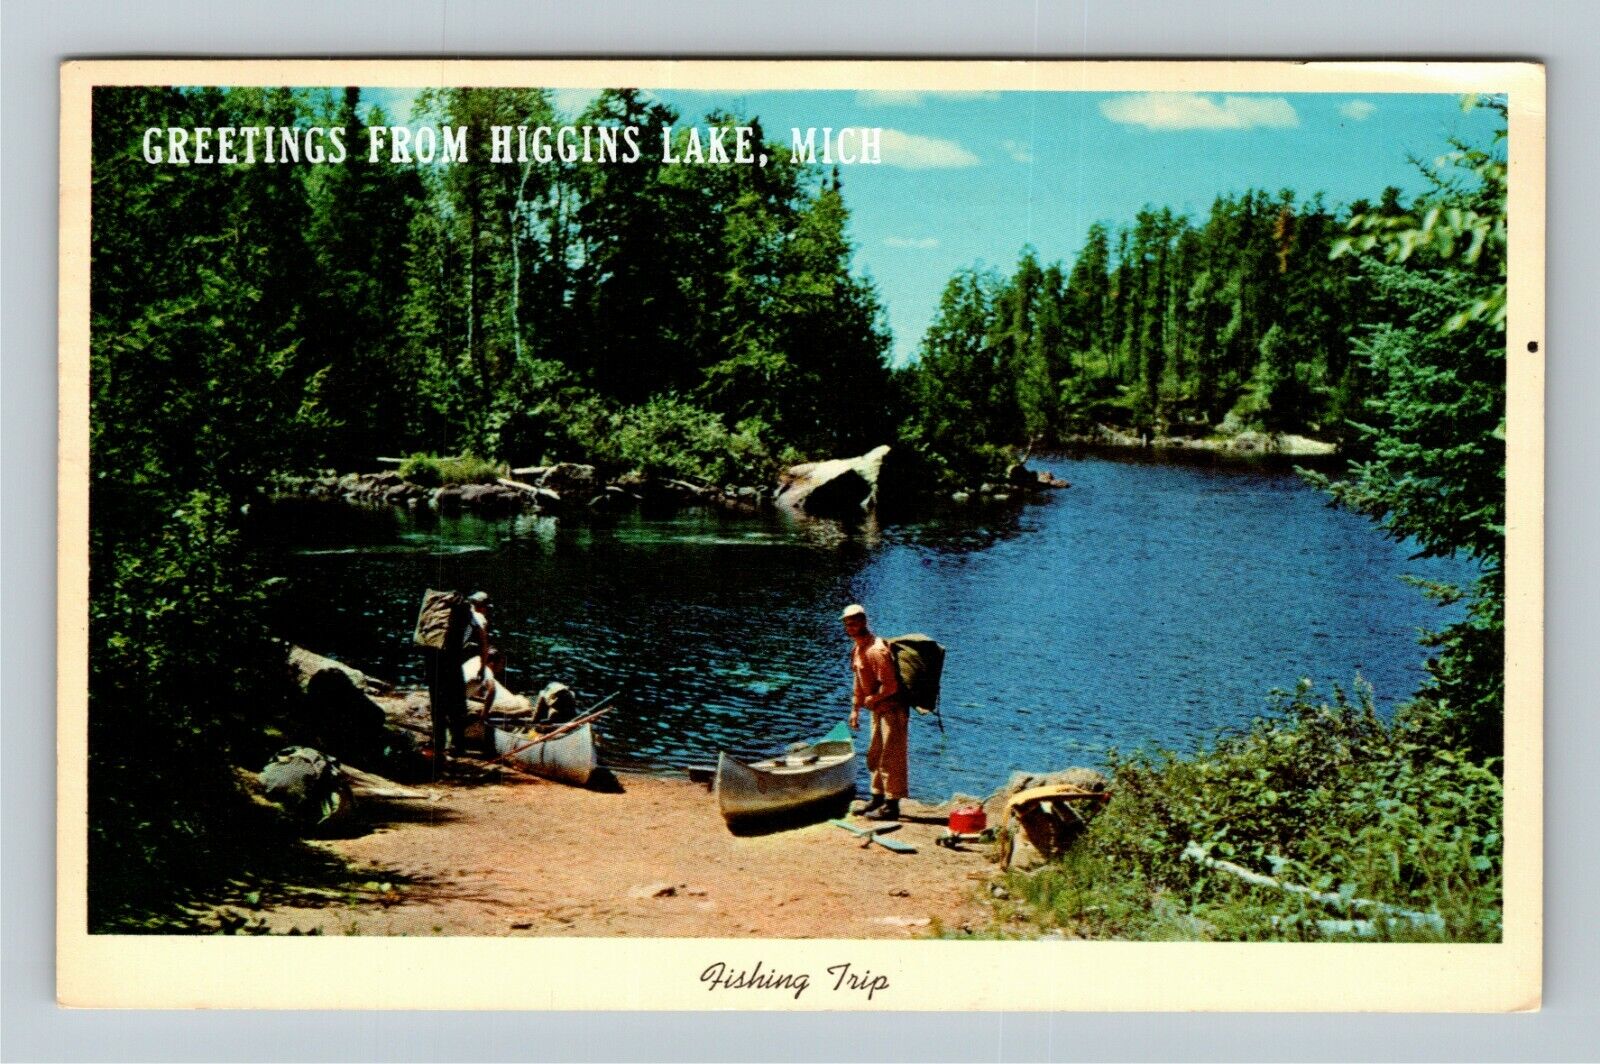 Higgins Lake MI-Michigan, General Greetings, Boating, c1967 Vintage Postcard